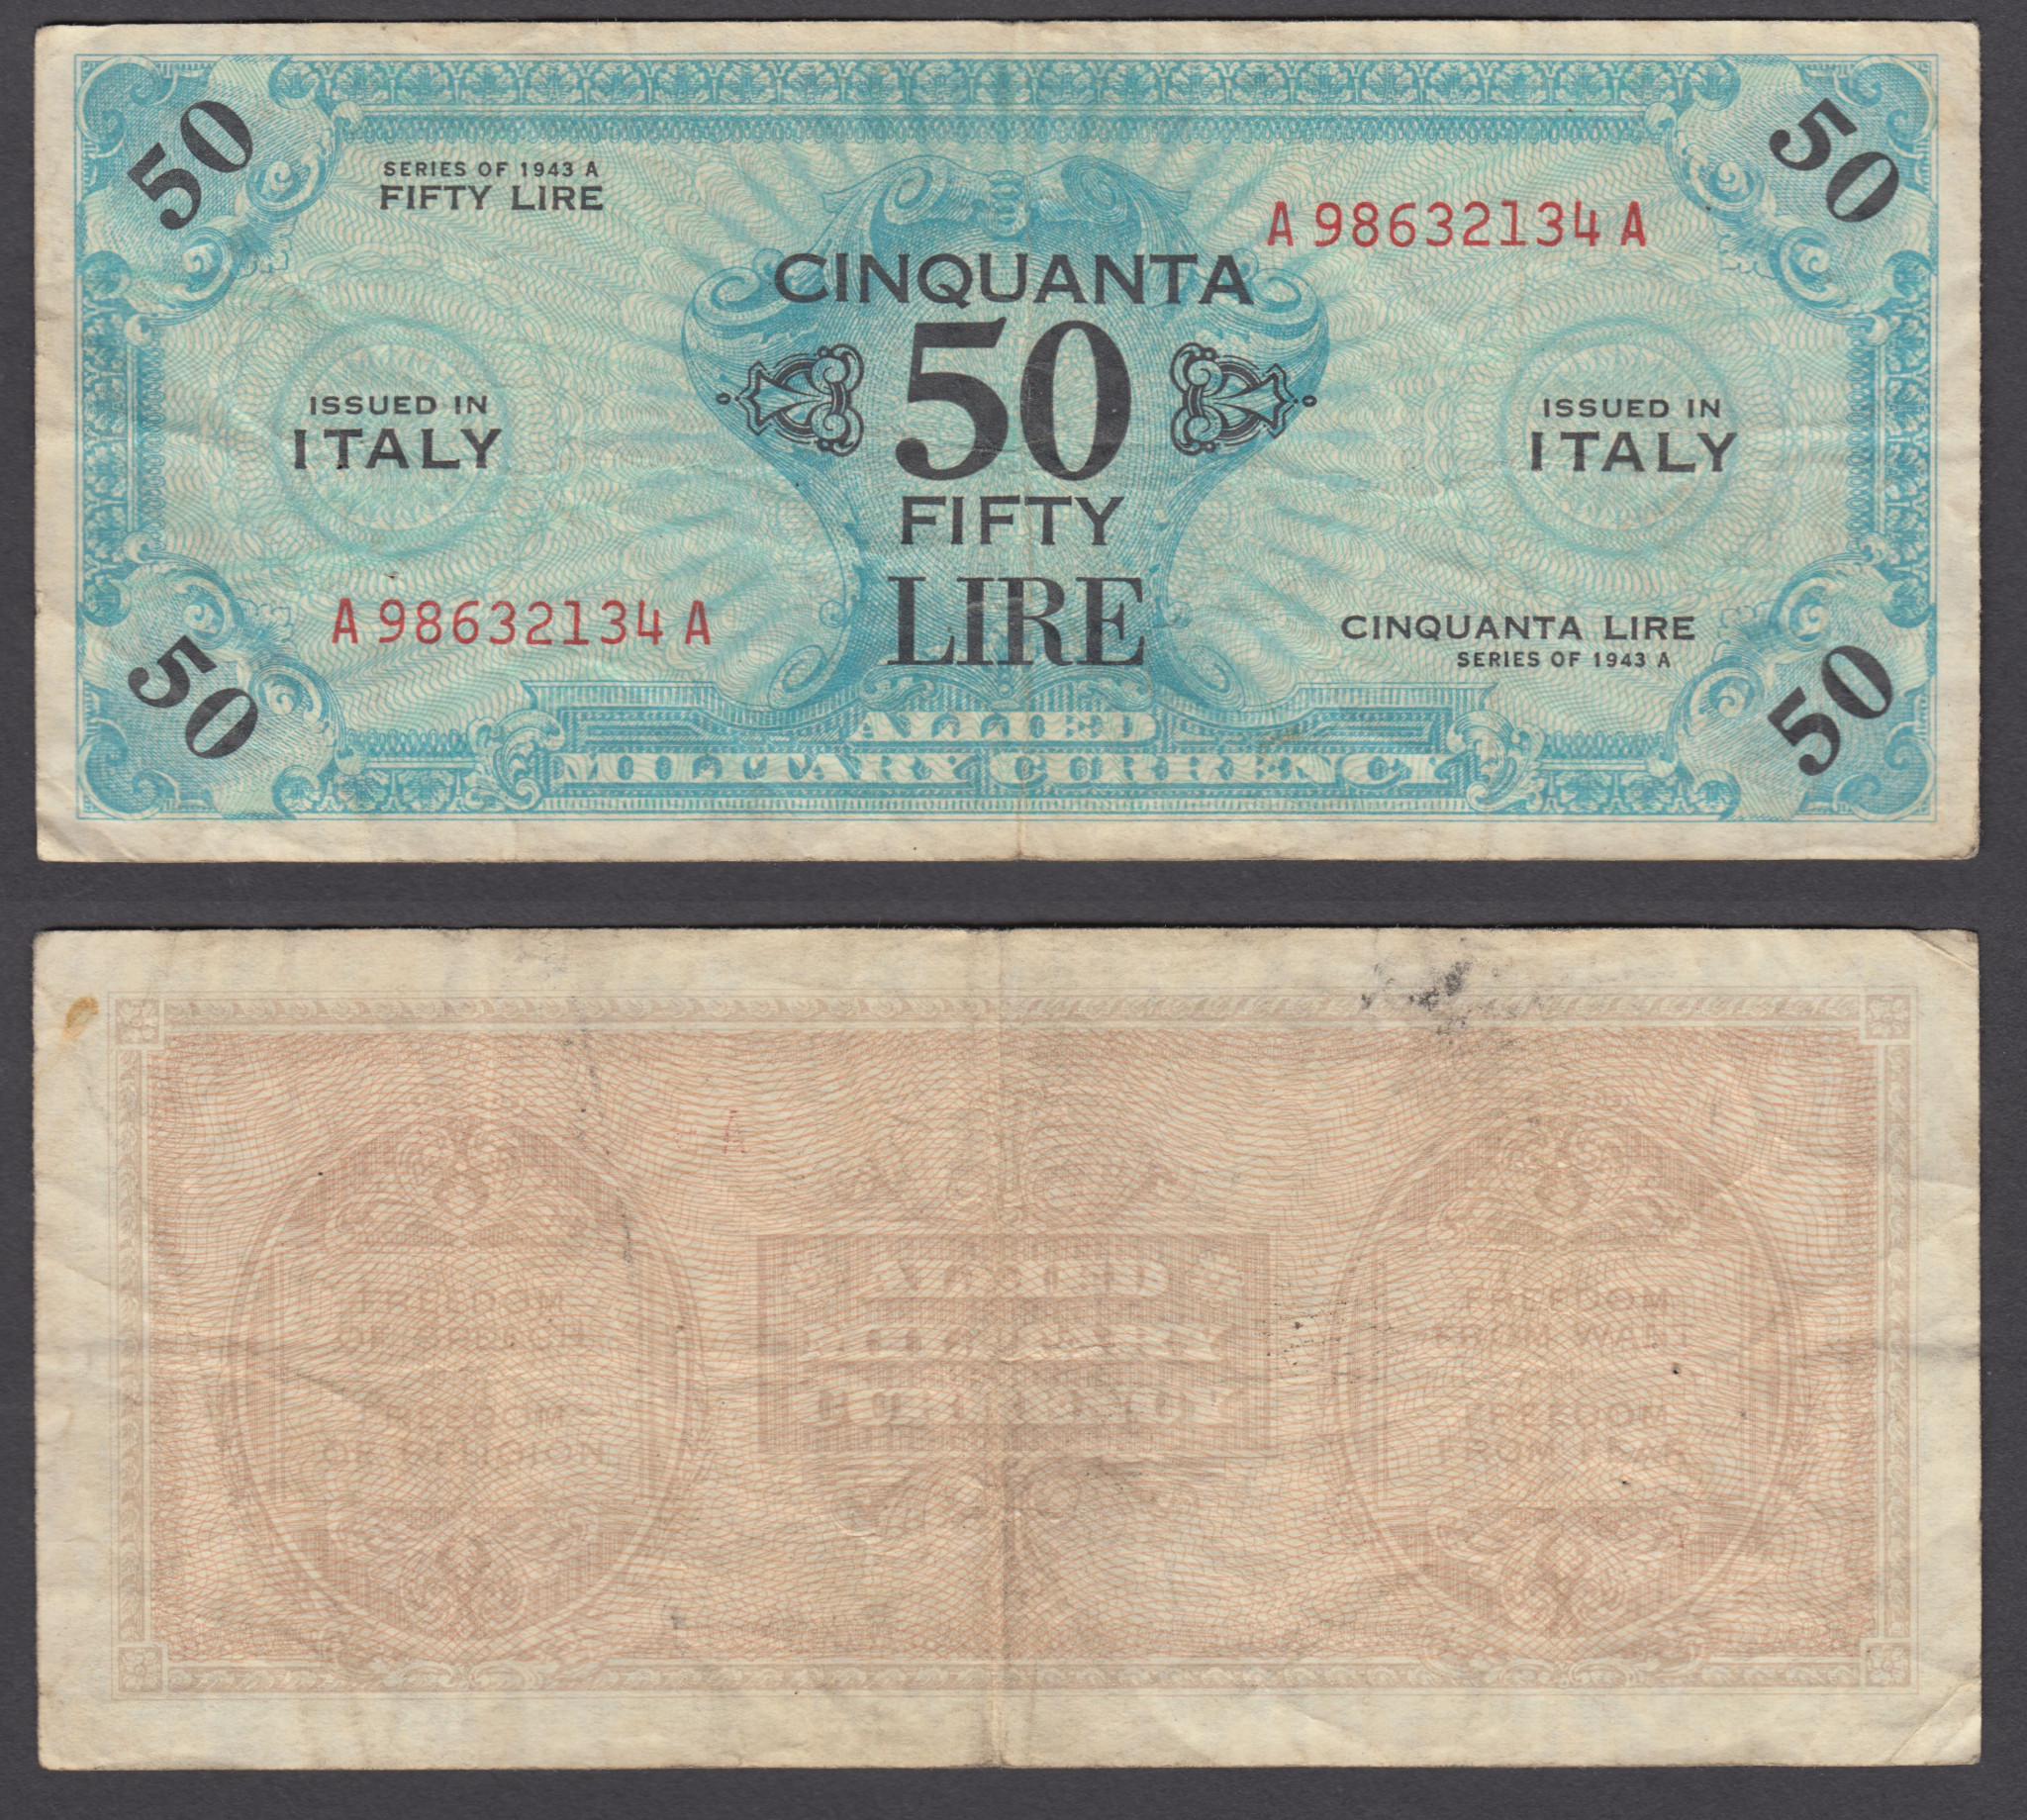 Italy 50 Lire 1943 A (F-VF) Condition Banknote P-M20a AMC ...